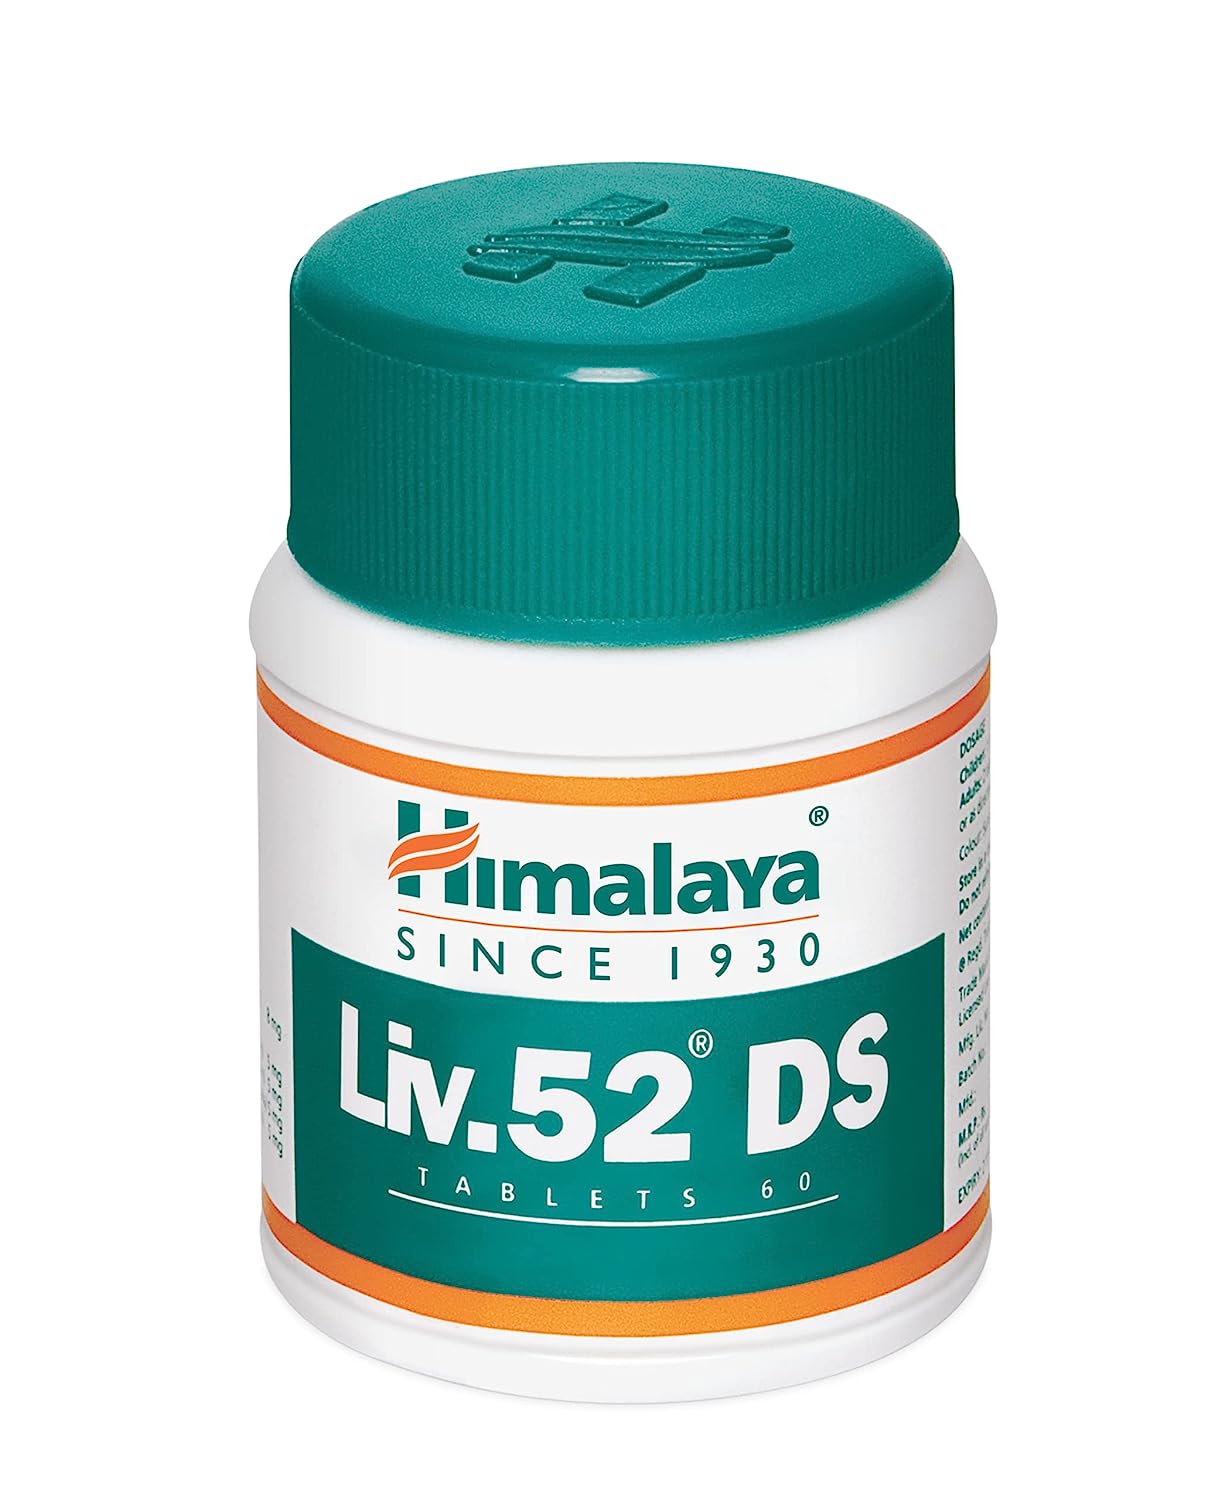 Himalaya Liv.52 DS, 60 Tablets